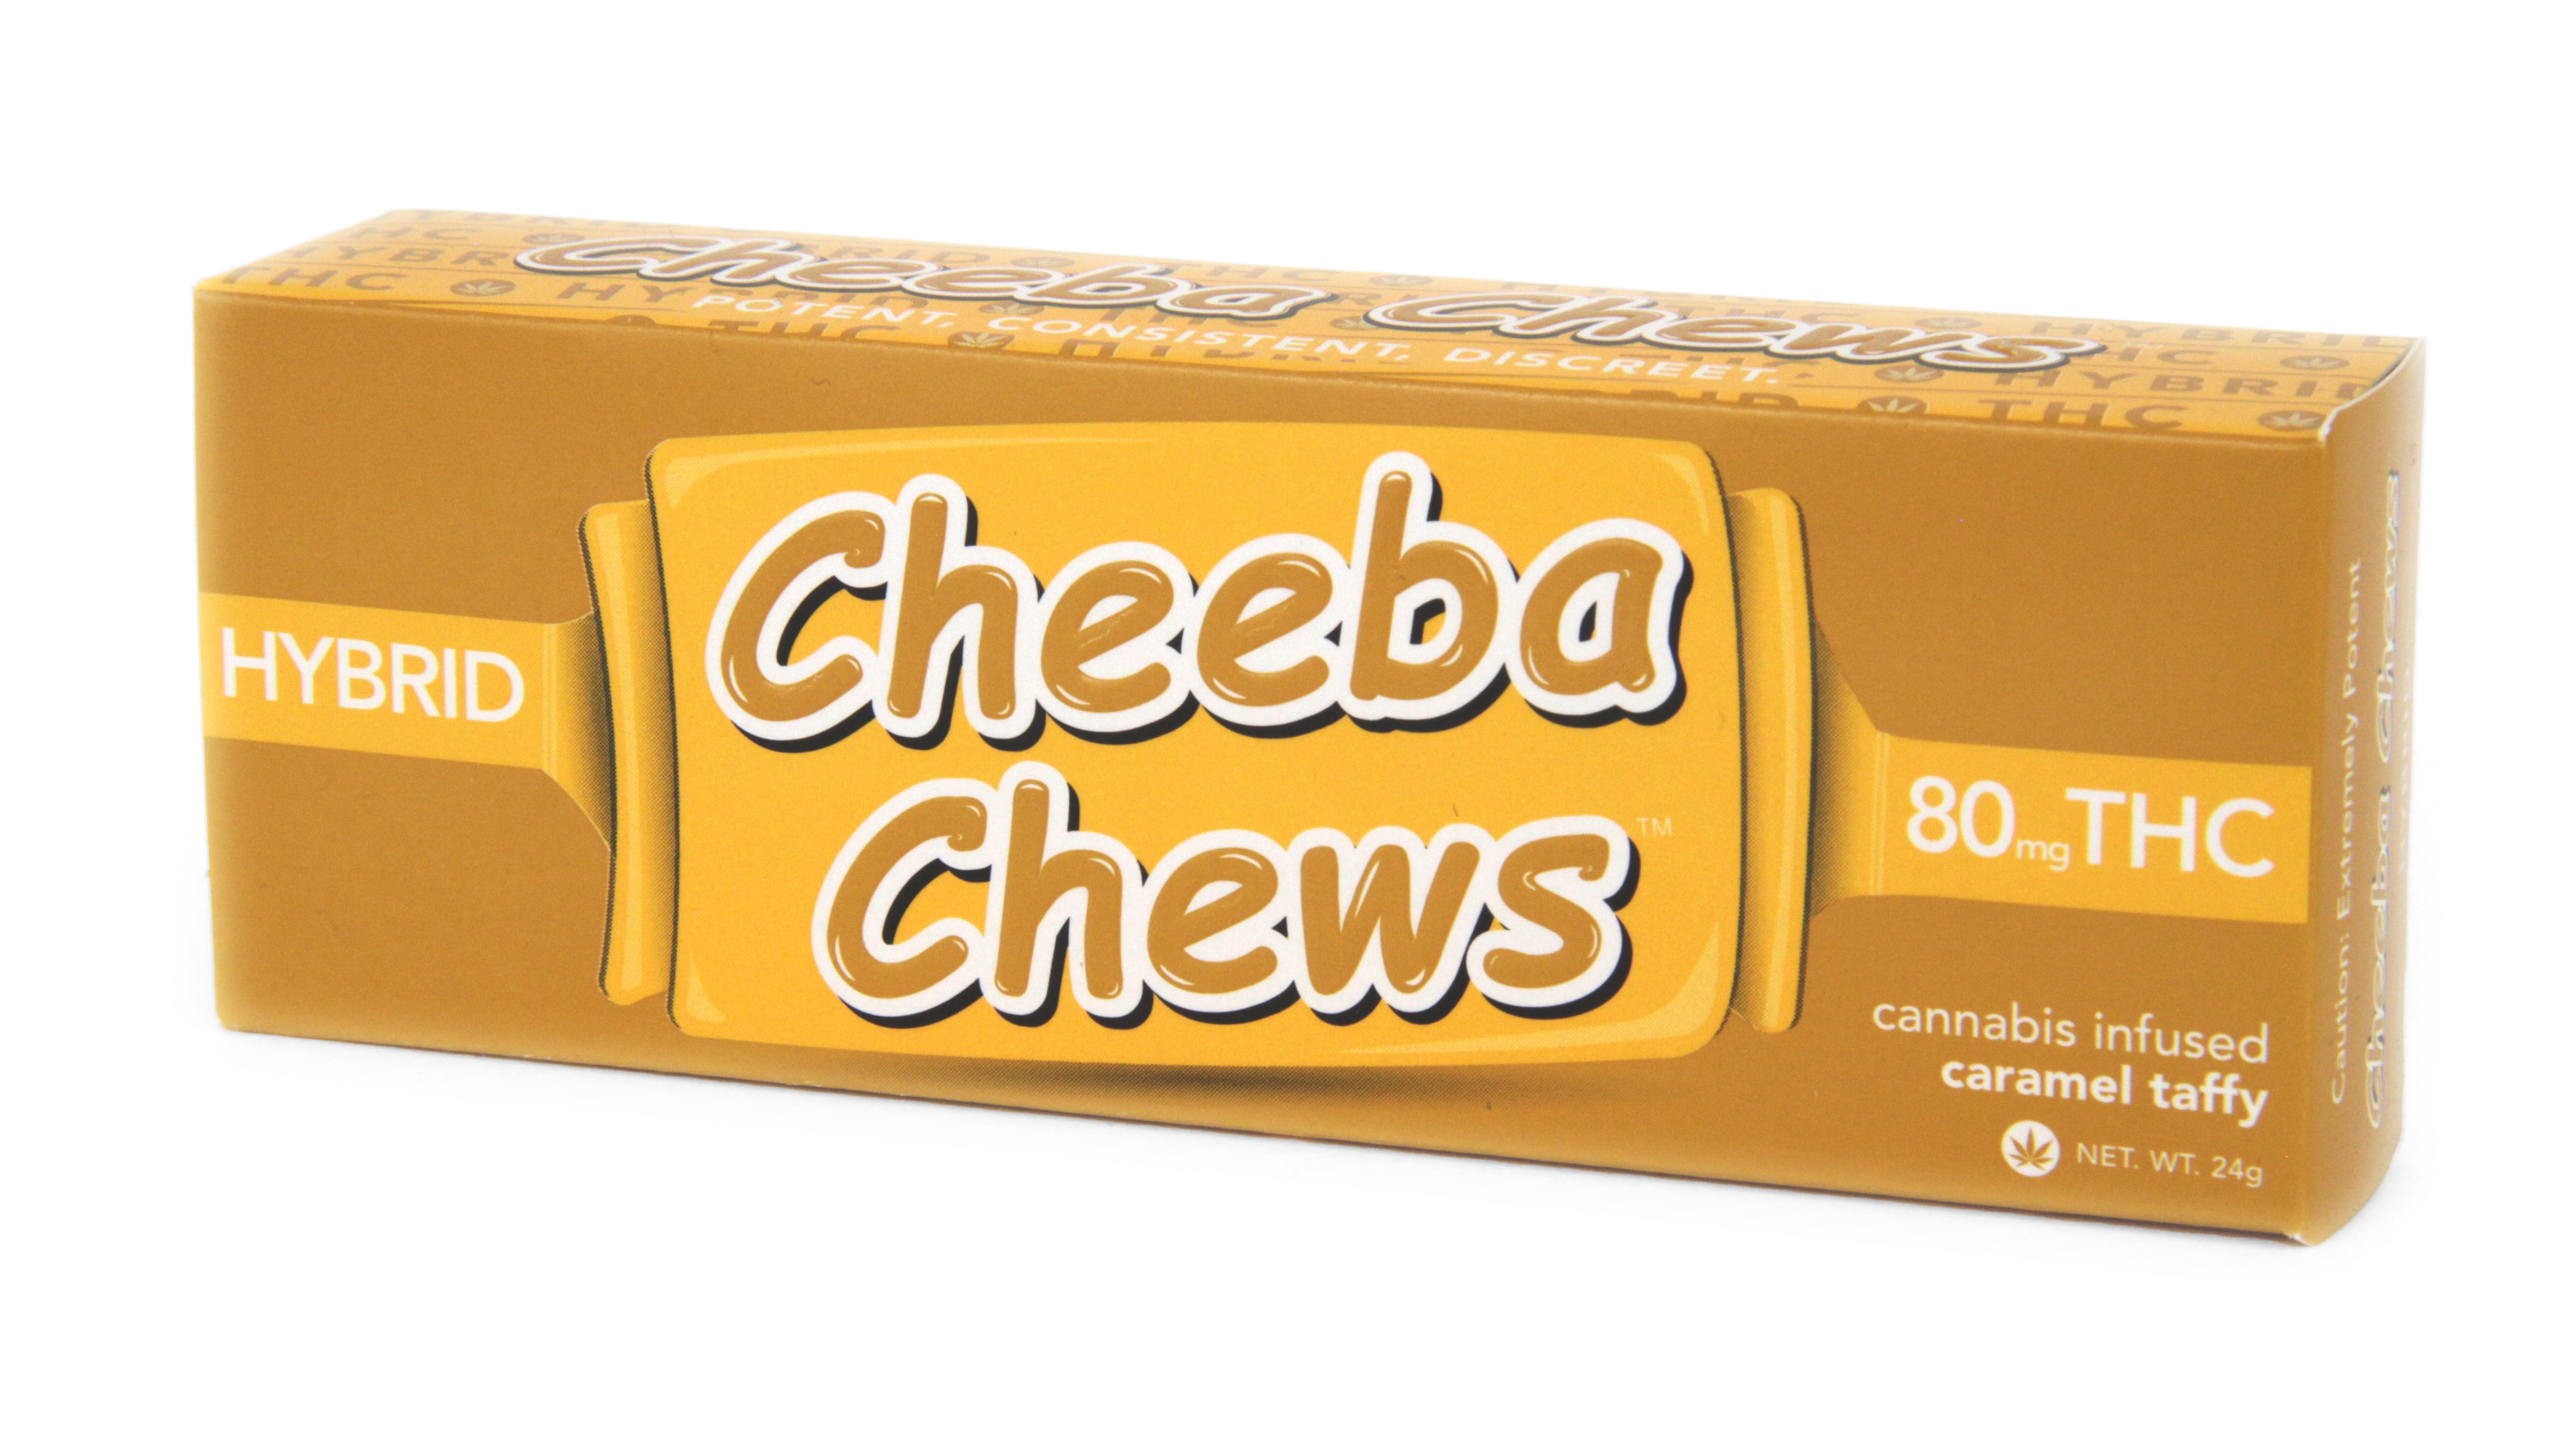 edible-cheeba-chews-taffy-80mg-caramel-hybrid